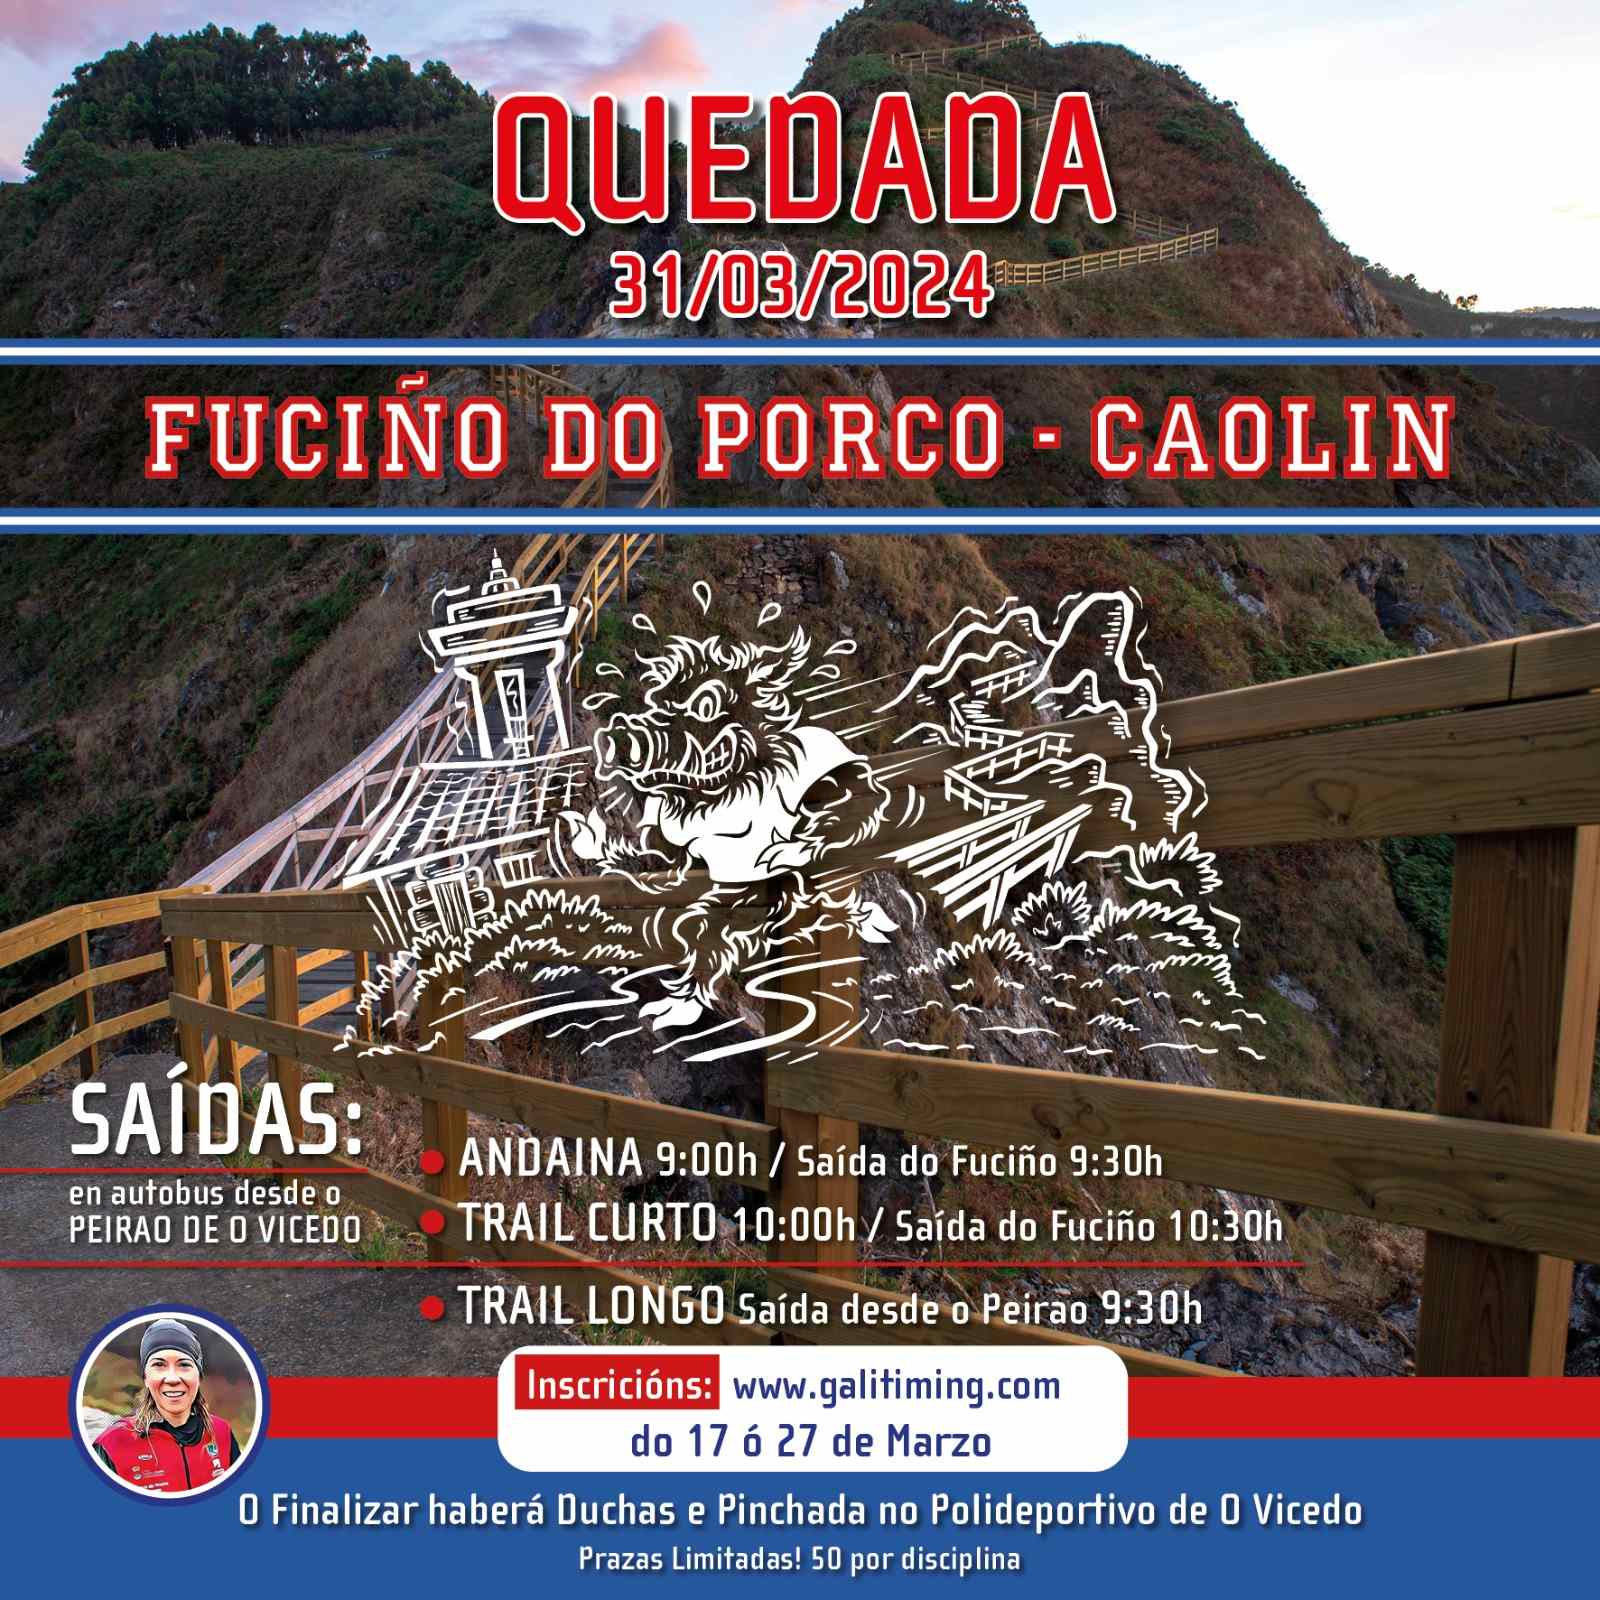 Cartel del evento QUEDADA FUCIÑO DO PORCO - CAOLIN - 2024